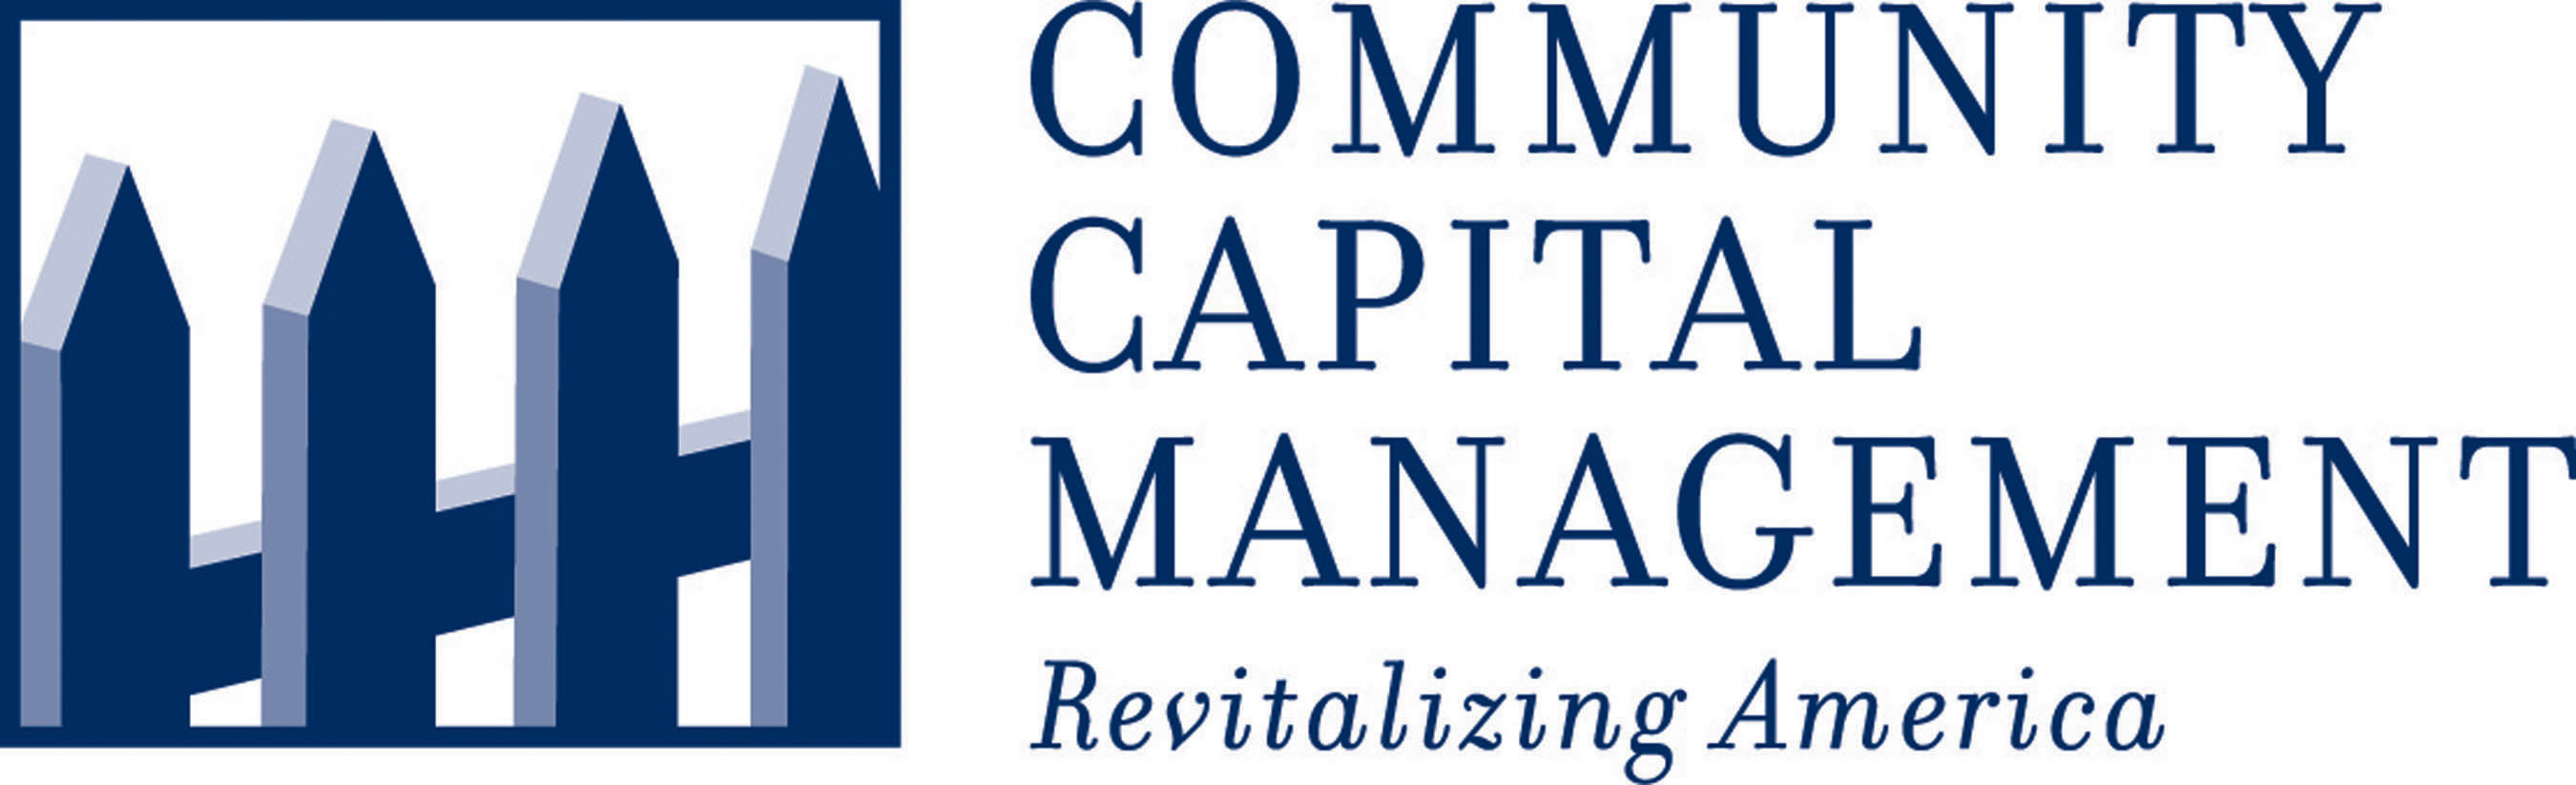 Community Capital Management Logo. (PRNewsFoto/Community Capital Management)